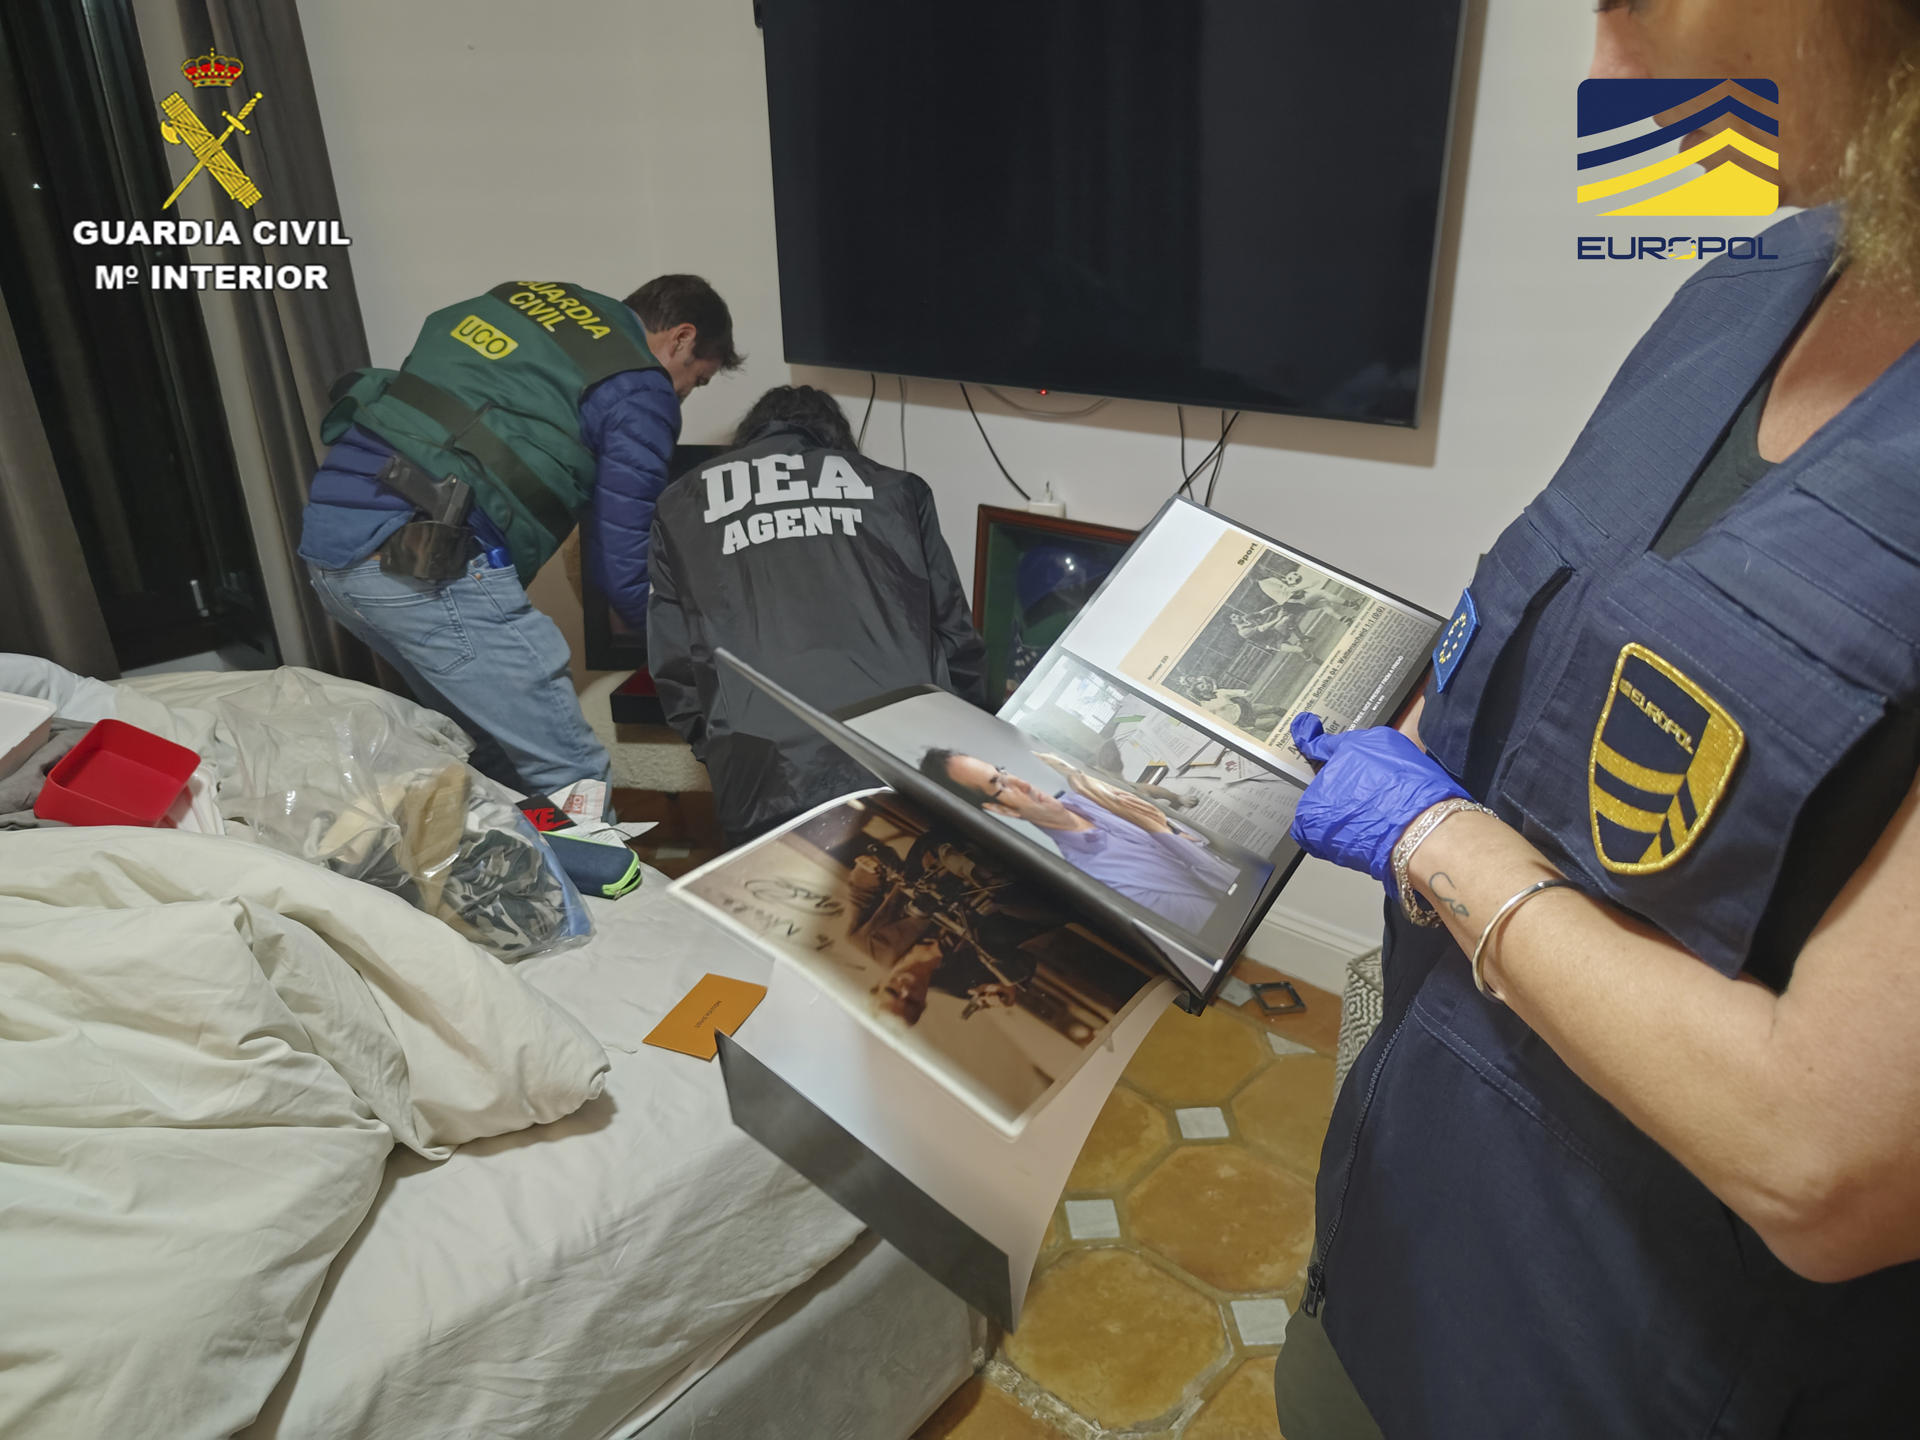 España y Europol desmantelan un supercártel de cocaína dirigido desde Dubái (Fotos)